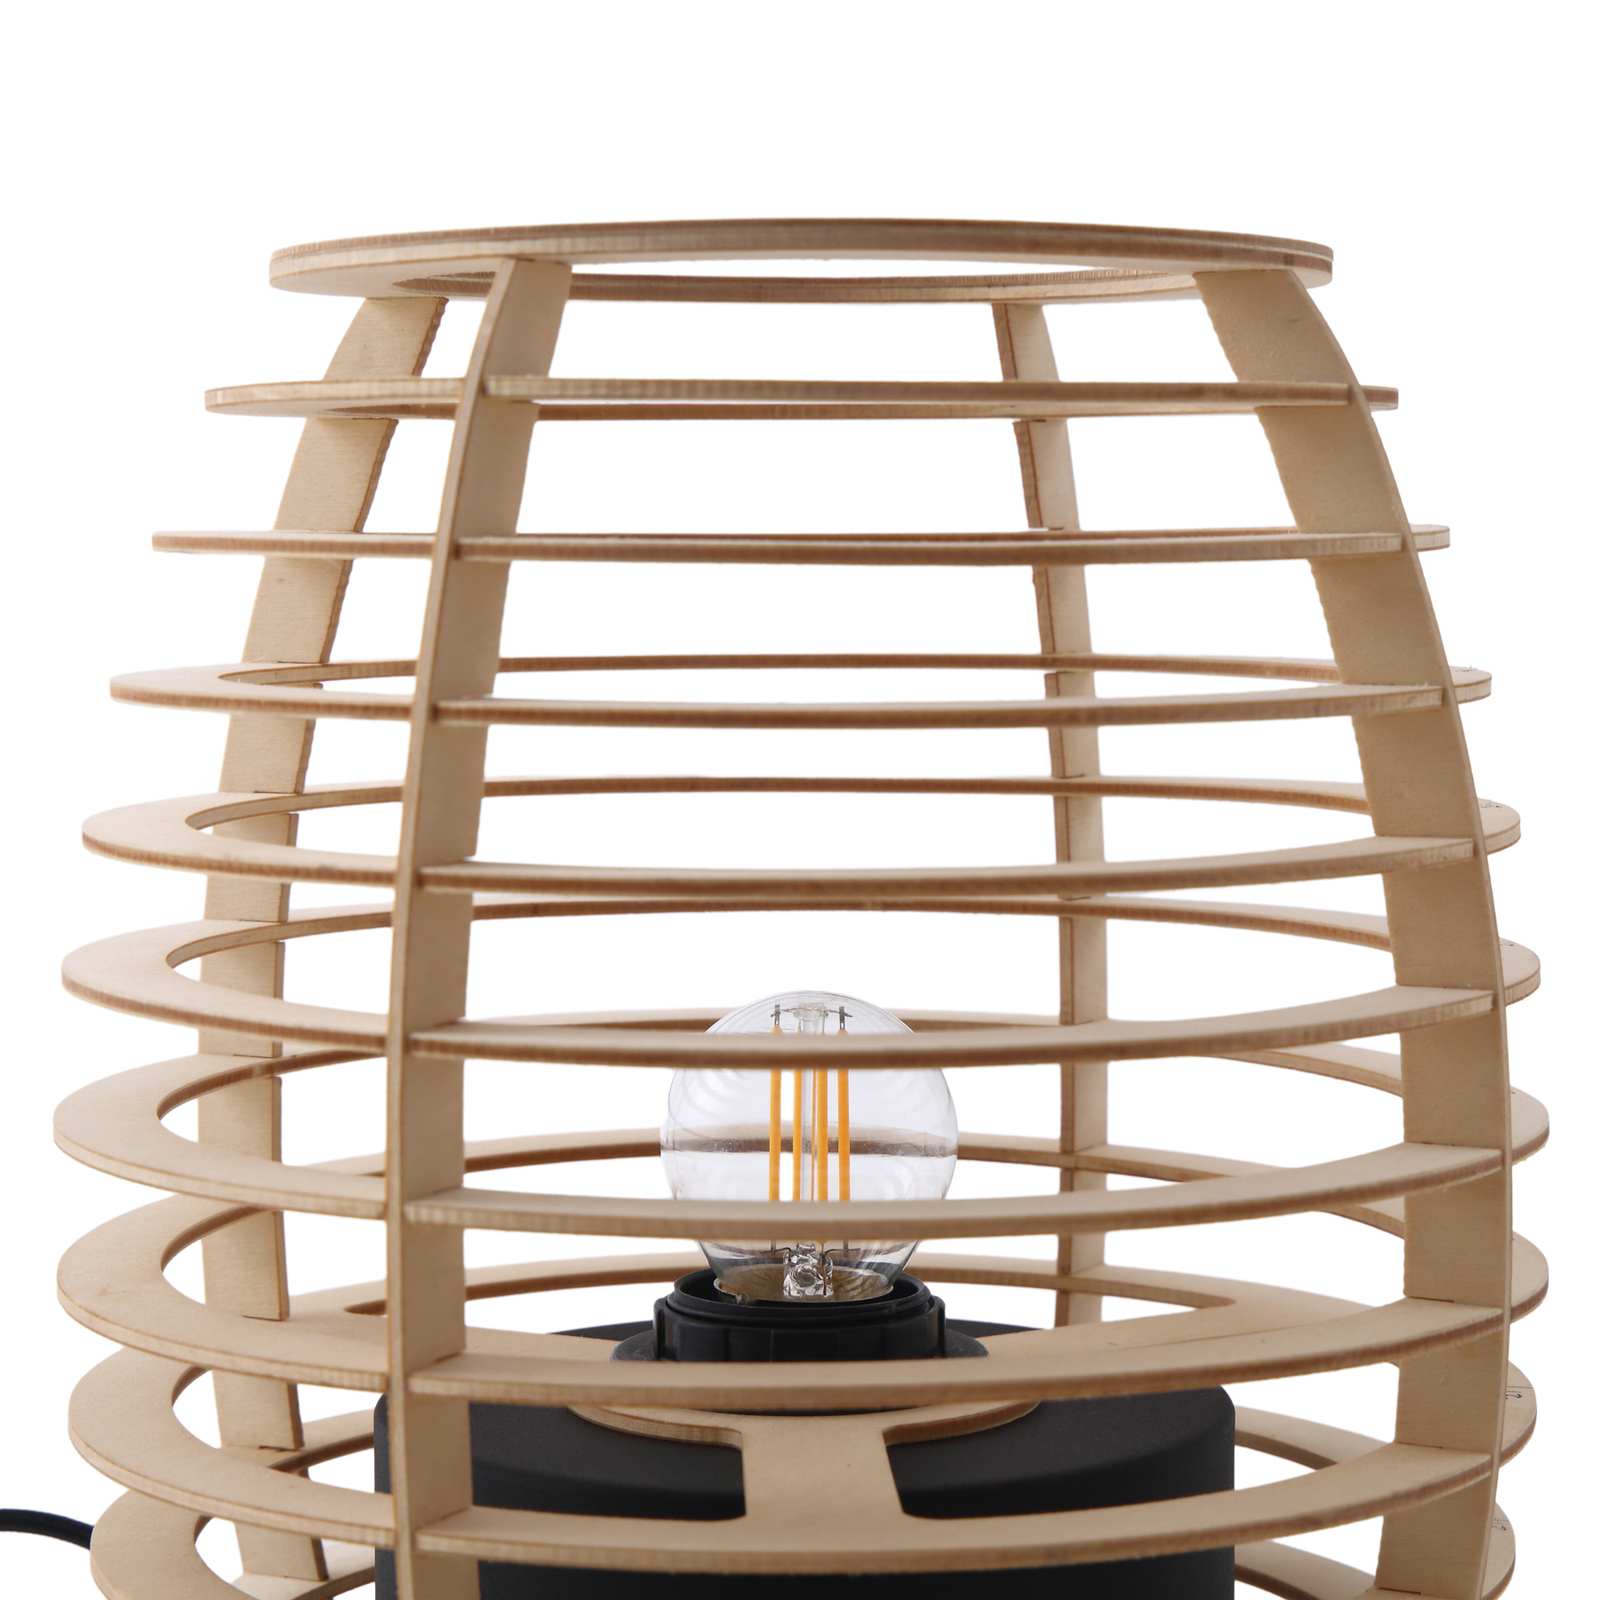 Lindby Ediz table lamp, multi-layered wooden shade